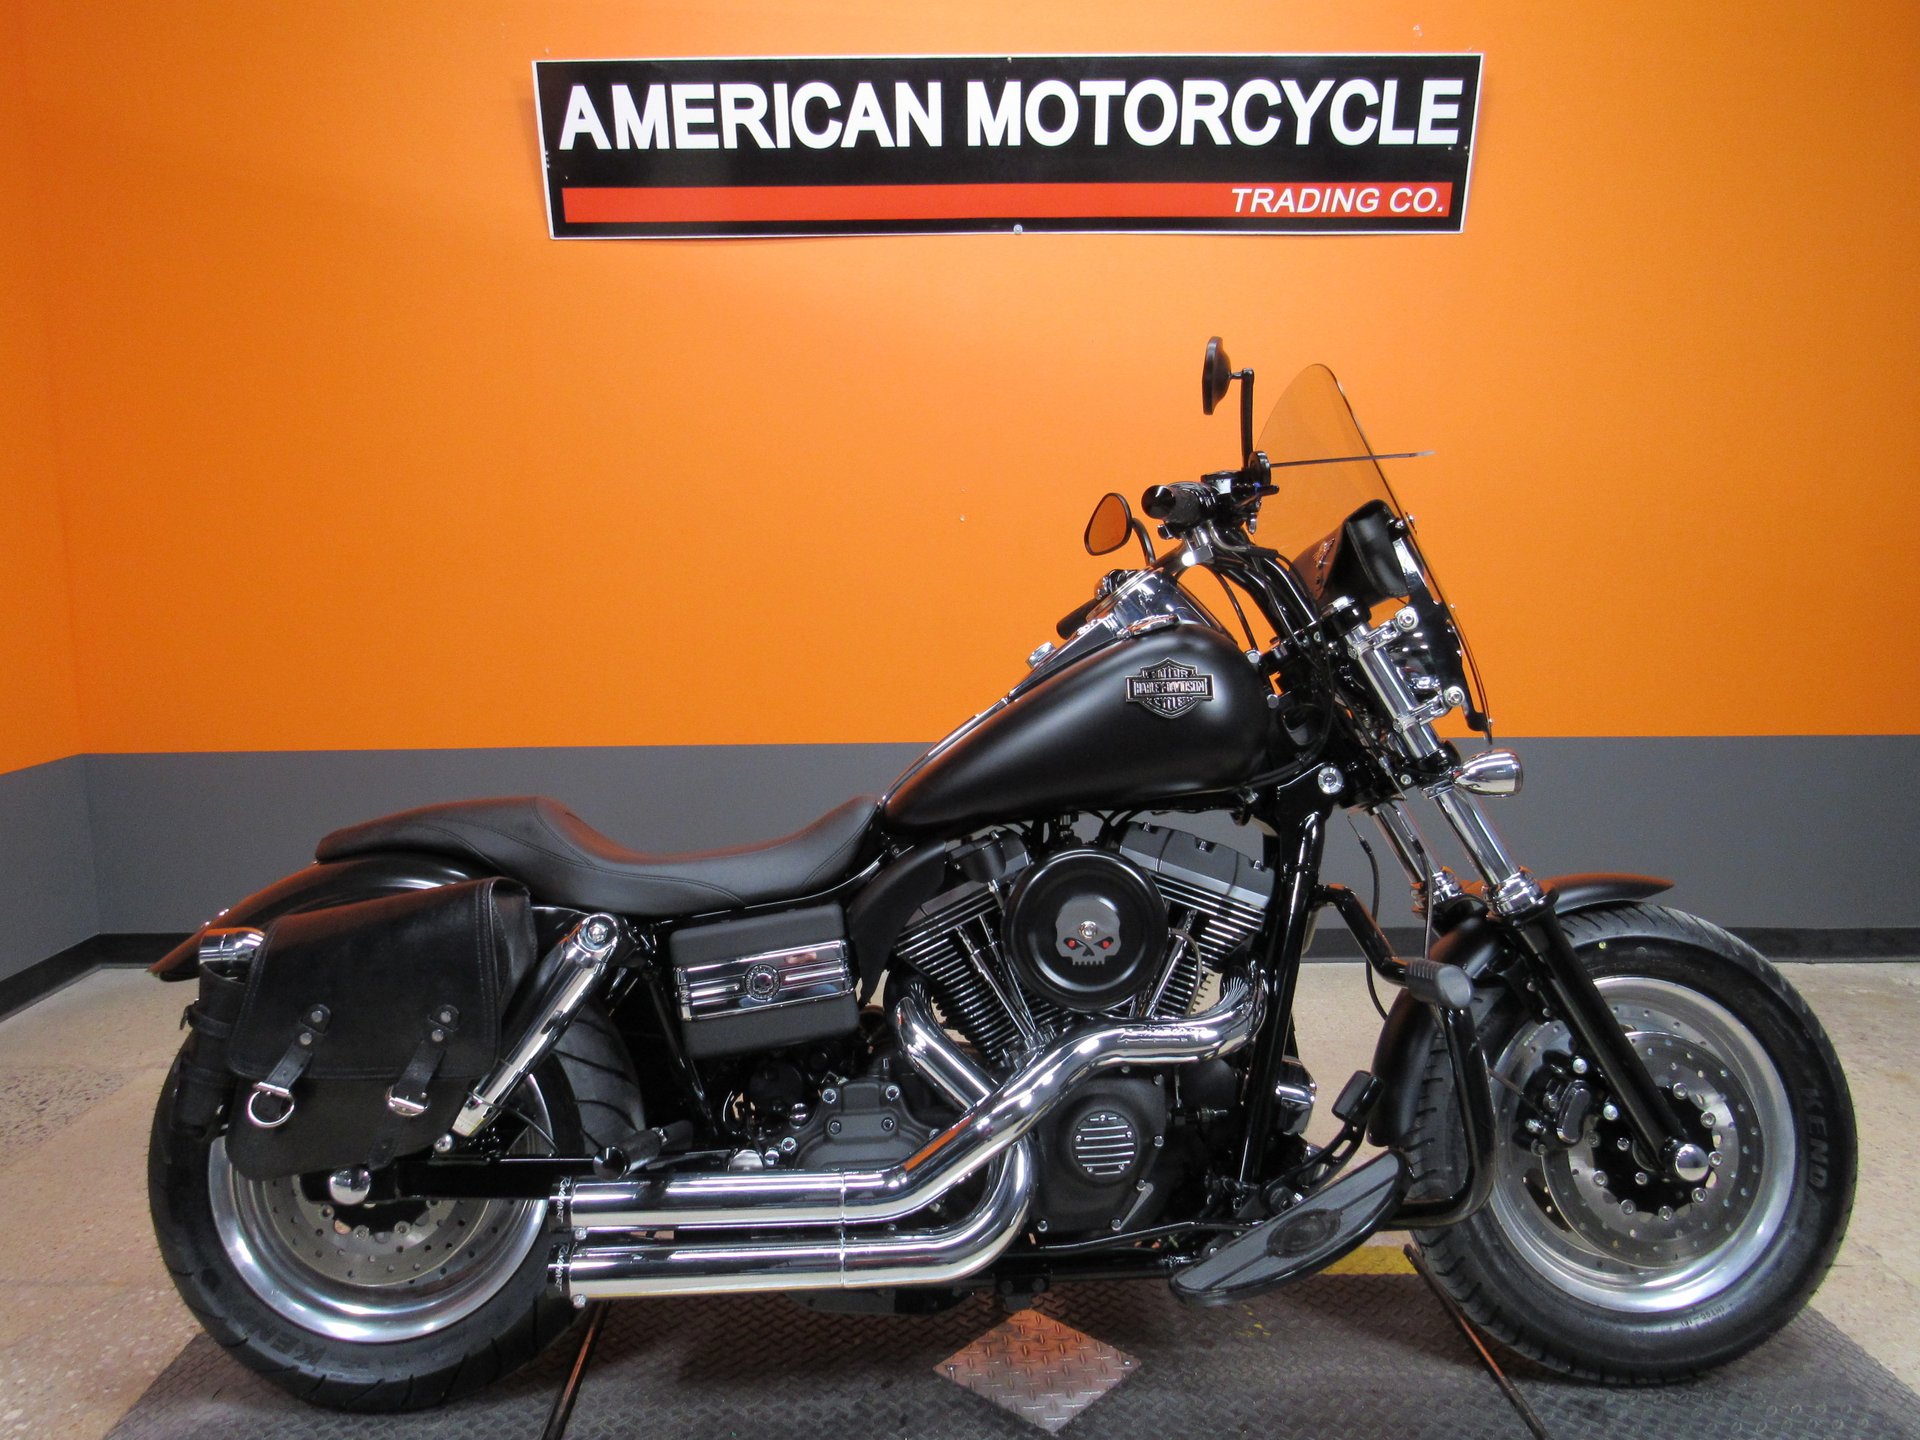 2008 Harley-Davidson Dyna Fat Bob | American Motorcycle Trading Company -  Used Harley Davidson Motorcycles